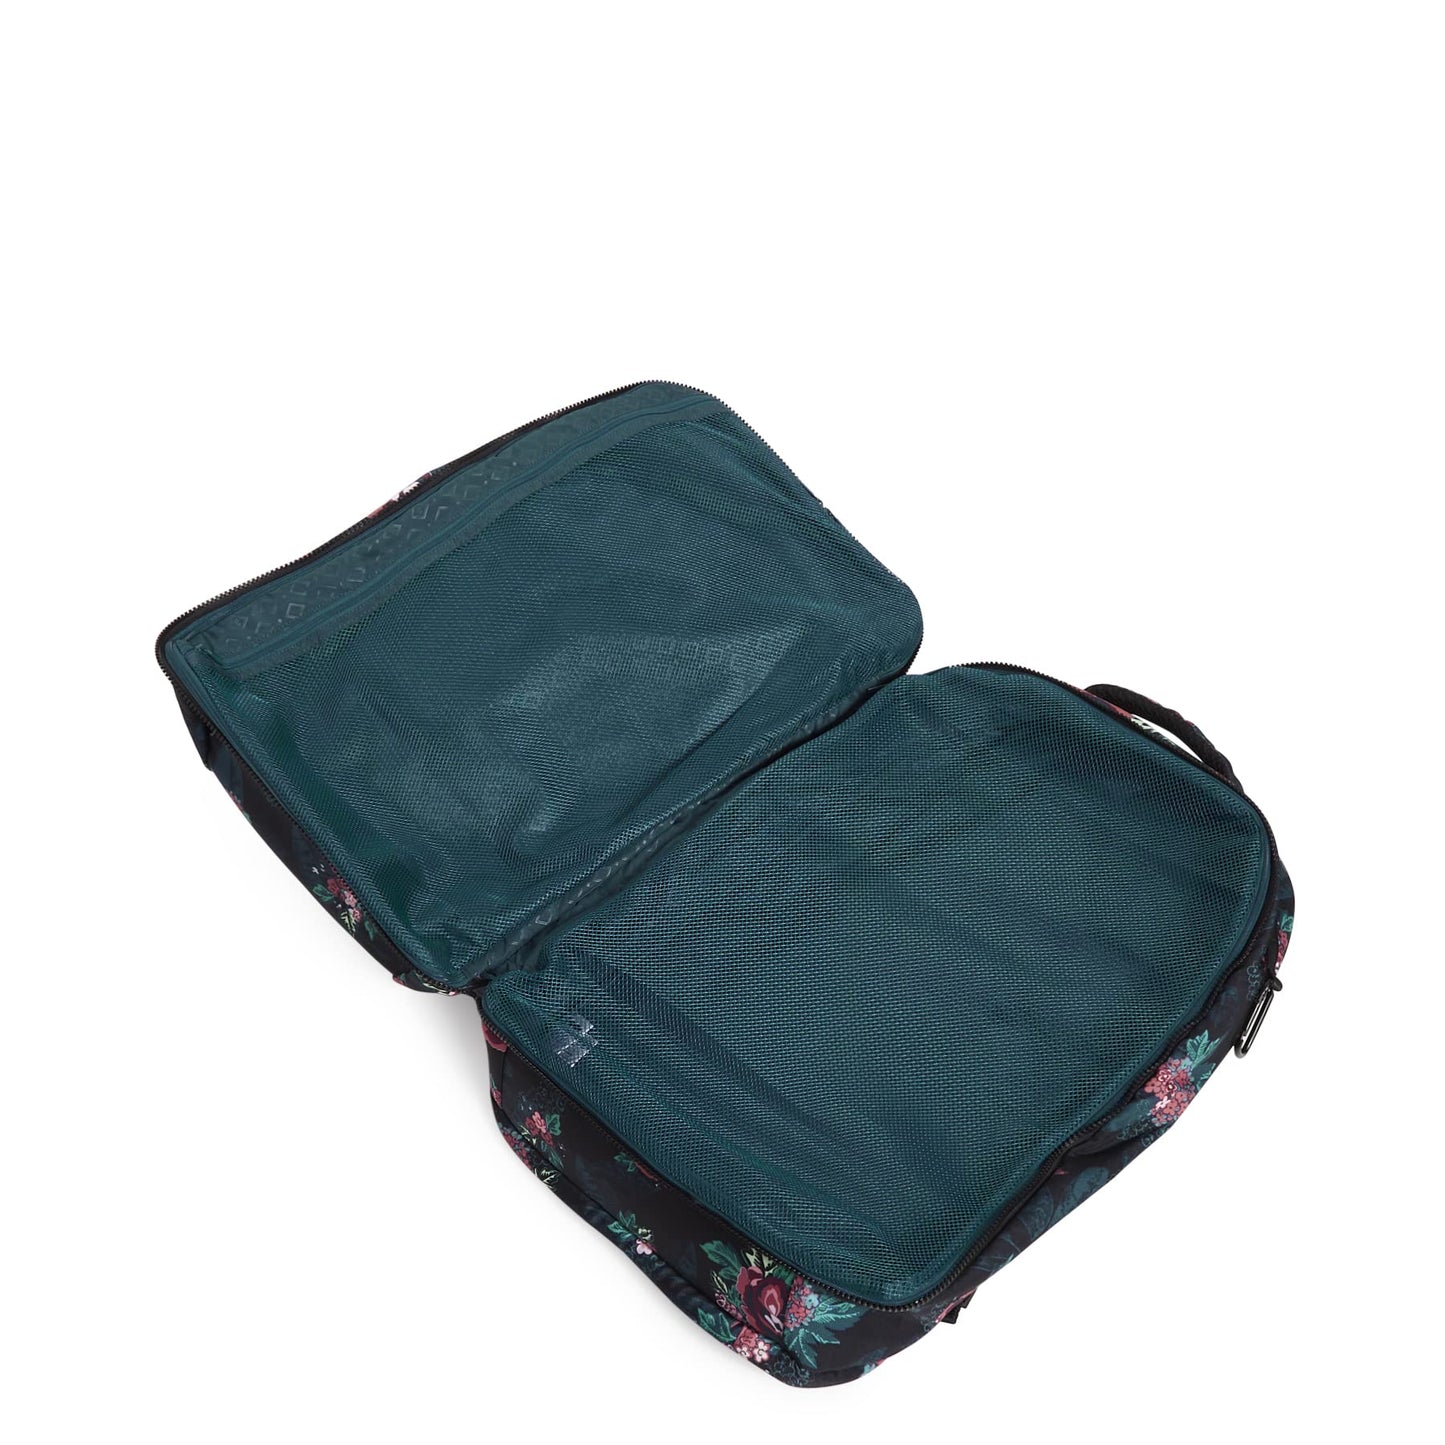 Vera Bradley Women's Recycled Lighten Up Reactive Lay Flat Backpack Travel Bag